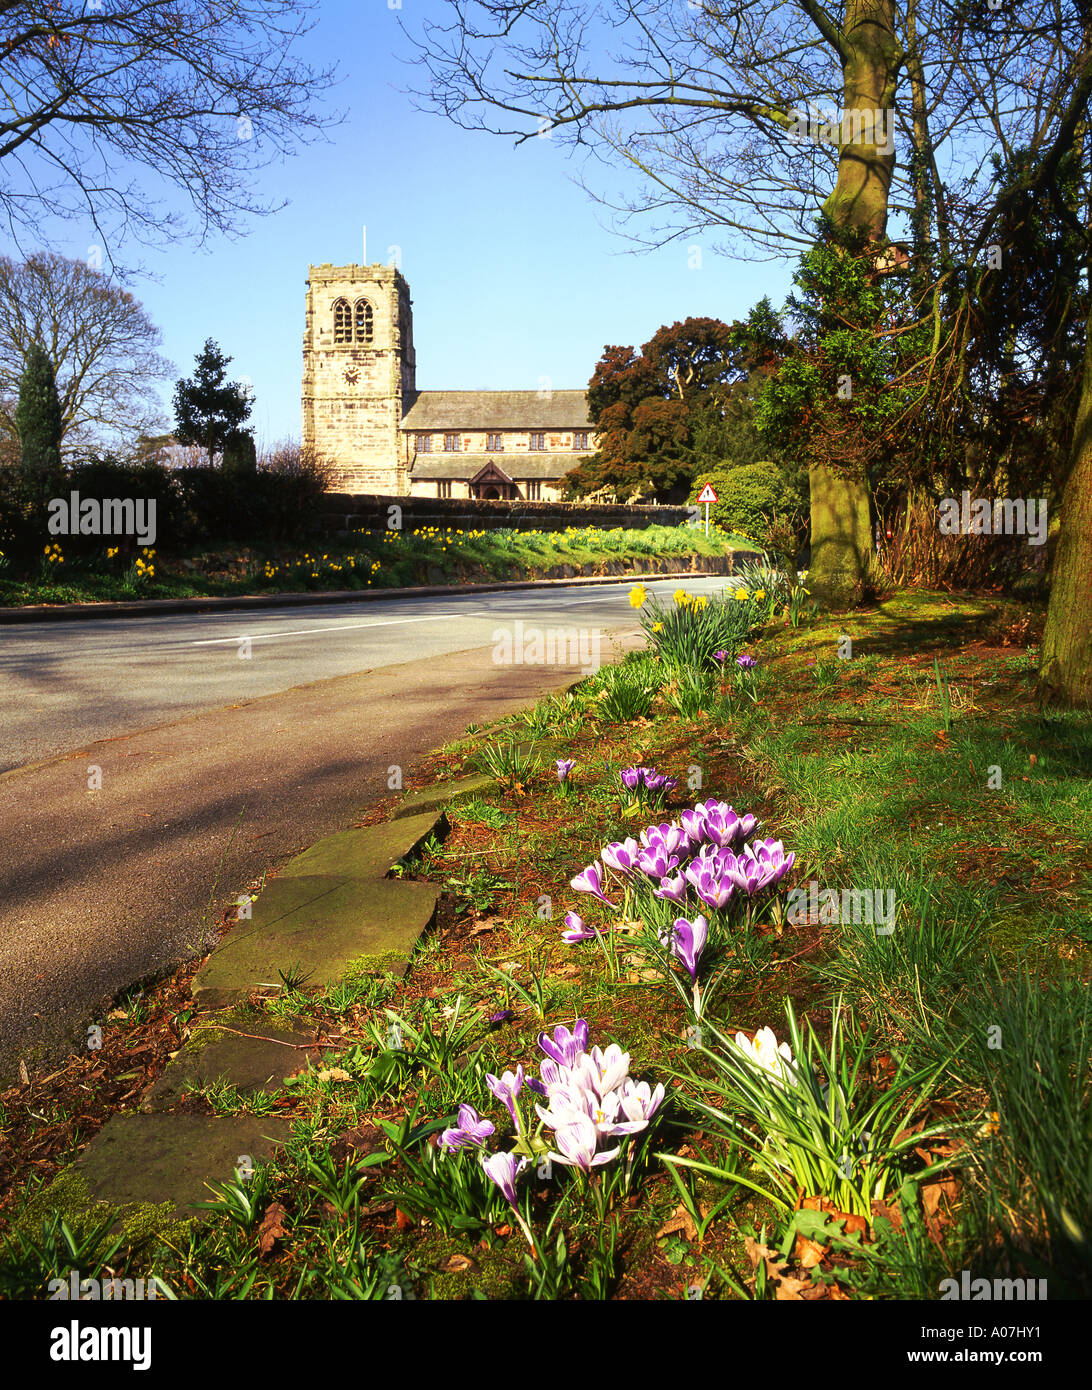 Azafrán y St Wilfreds iglesia parroquial en primavera, Mobberley, Cheshire, Inglaterra, Reino Unido. Foto de stock